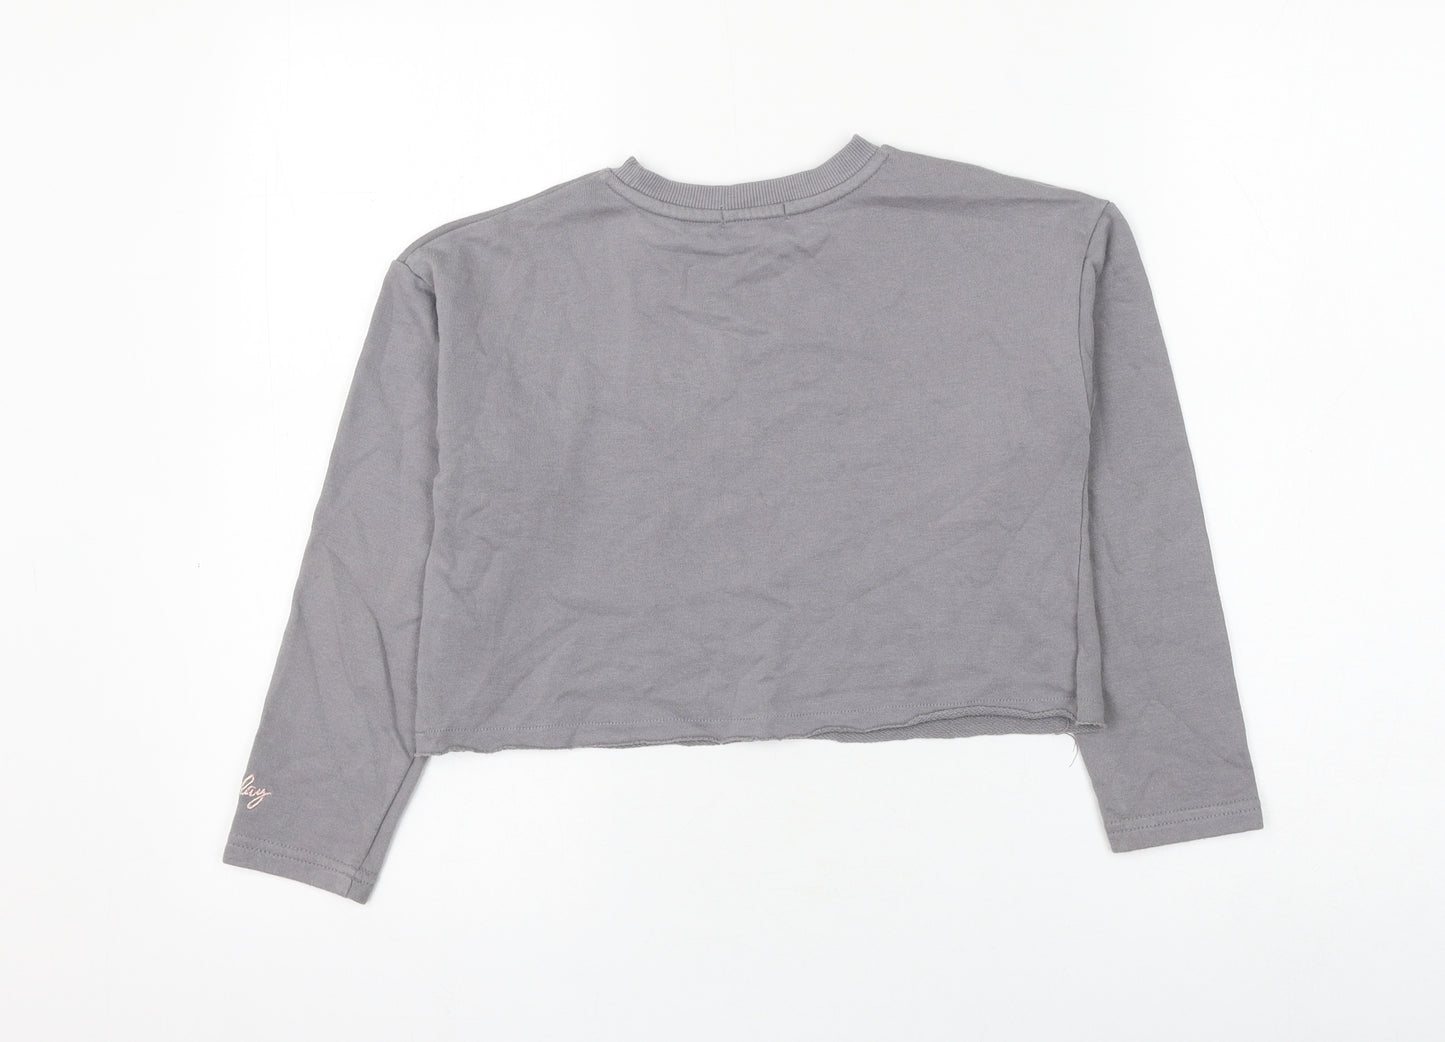 Primark Girls Grey Cotton Pullover Sweatshirt Size 8-9 Years Pullover - Smile